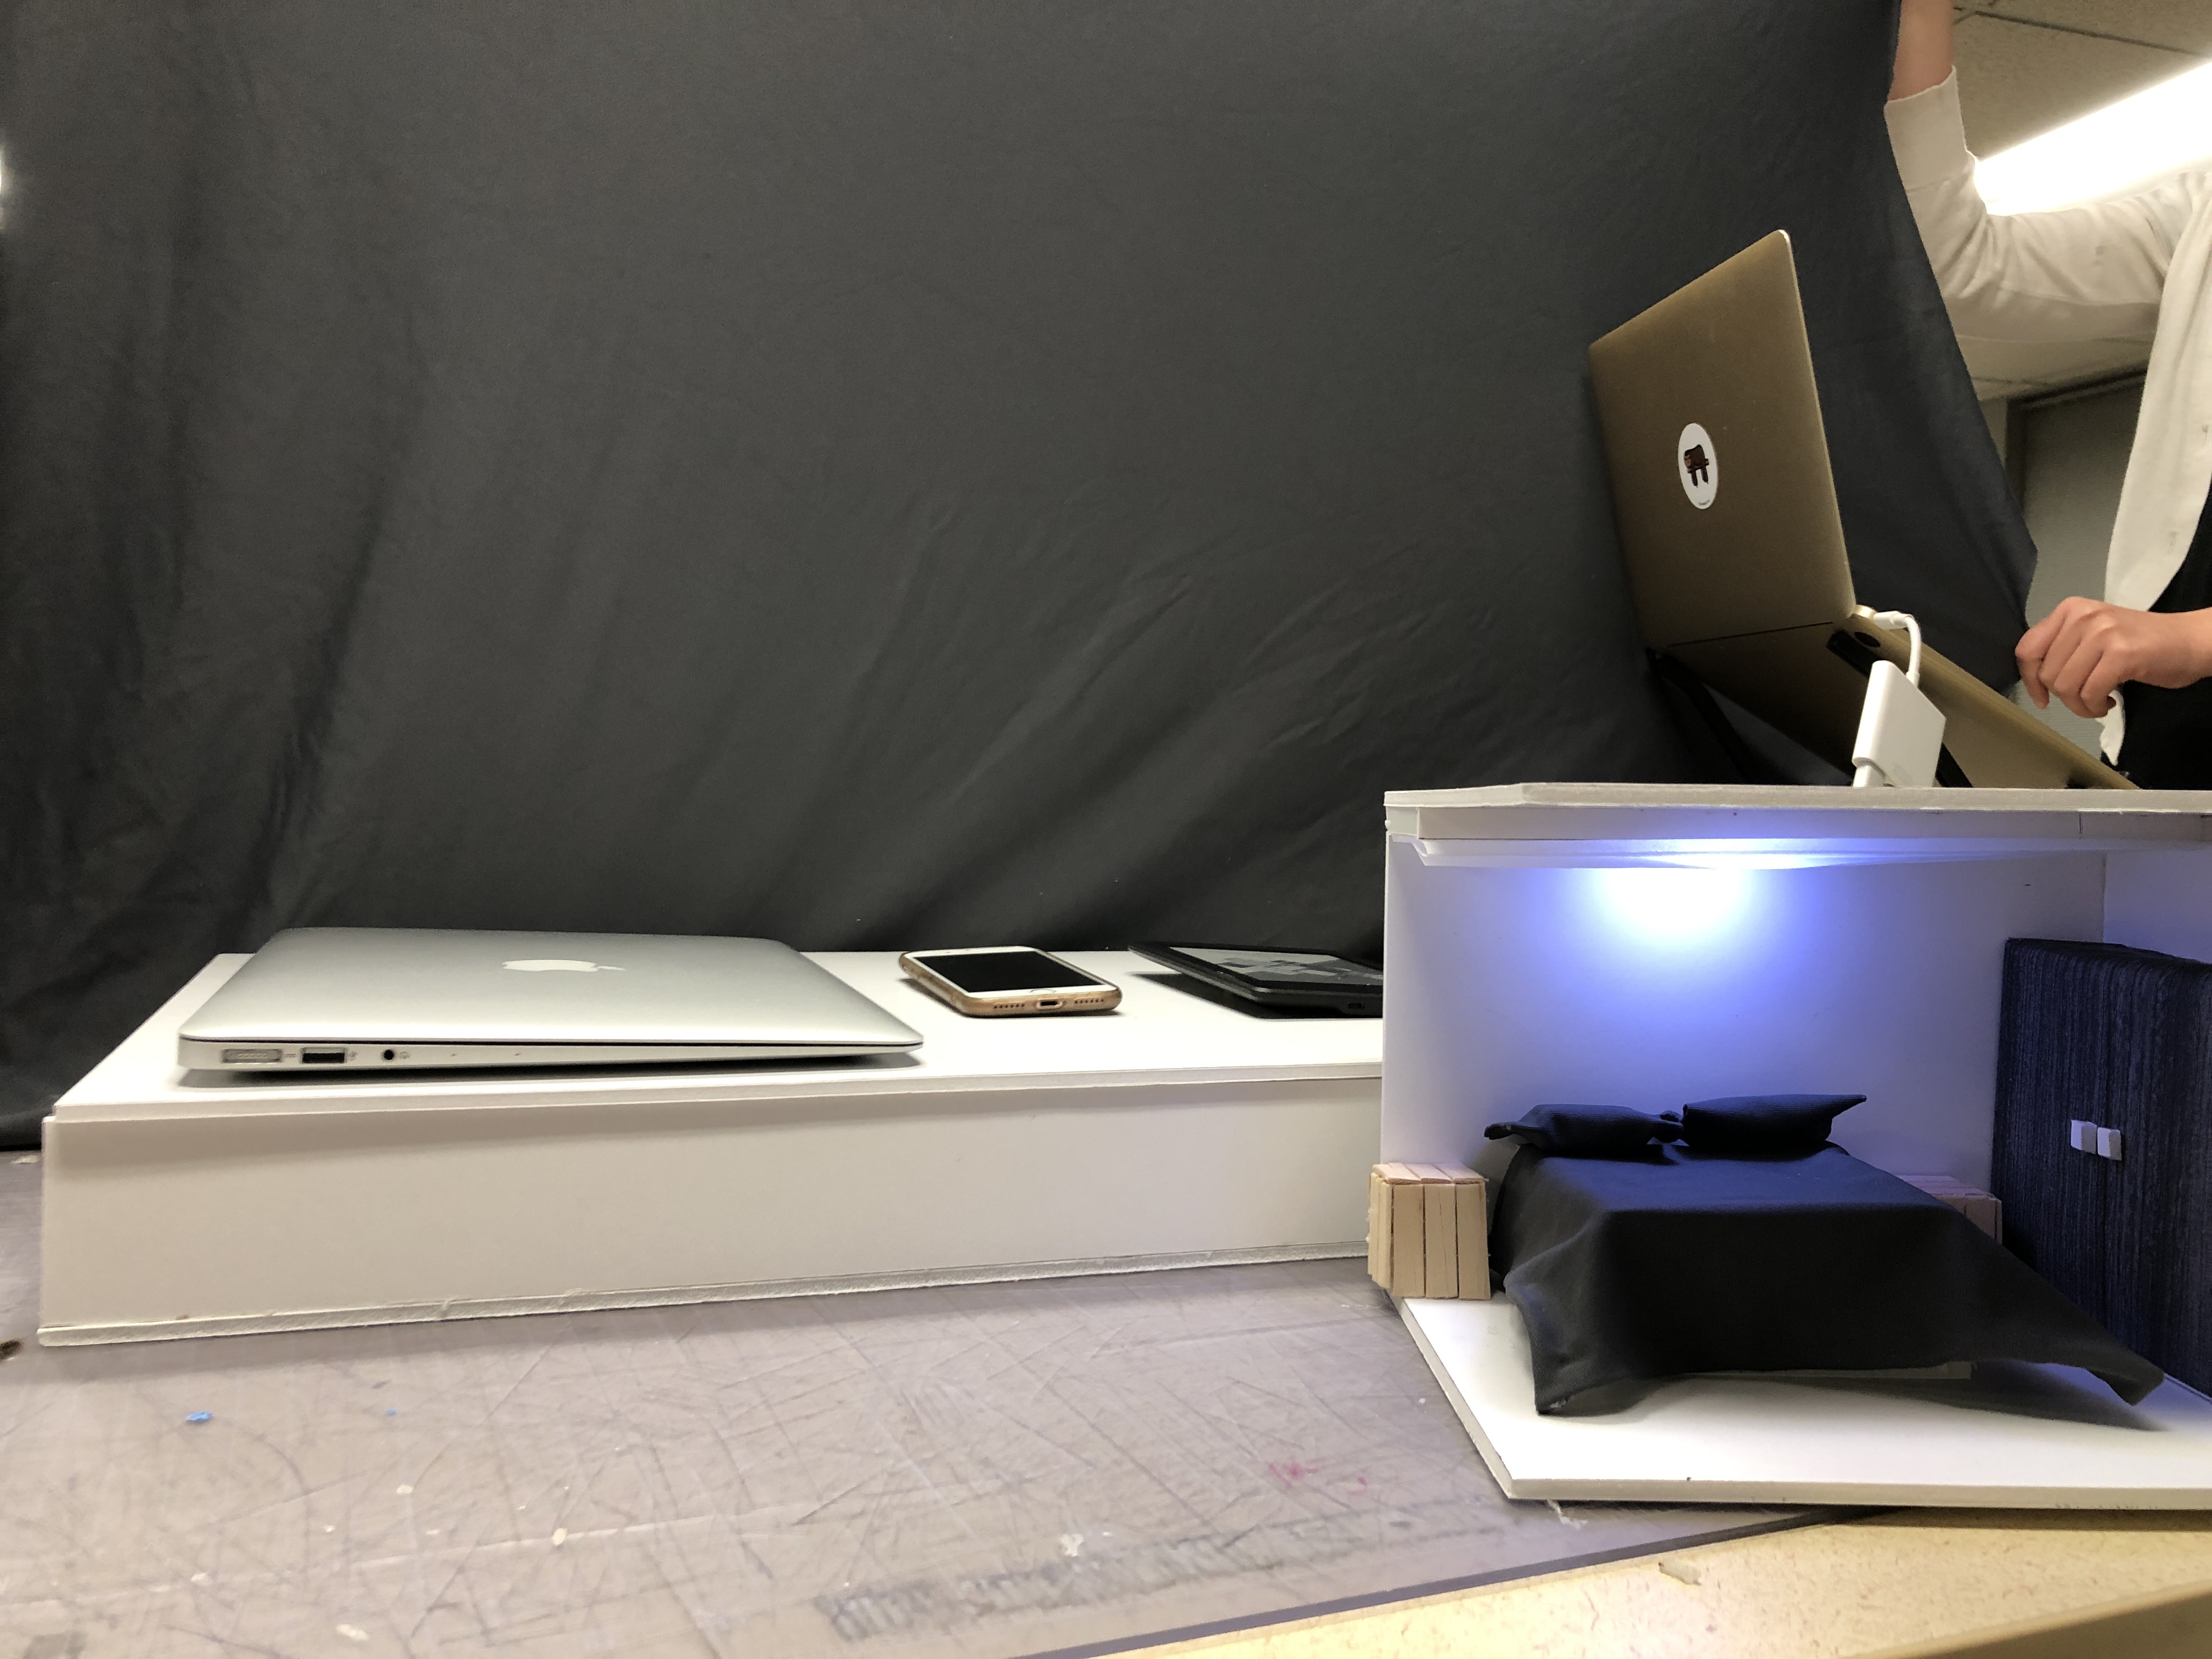 The smart light final prototype